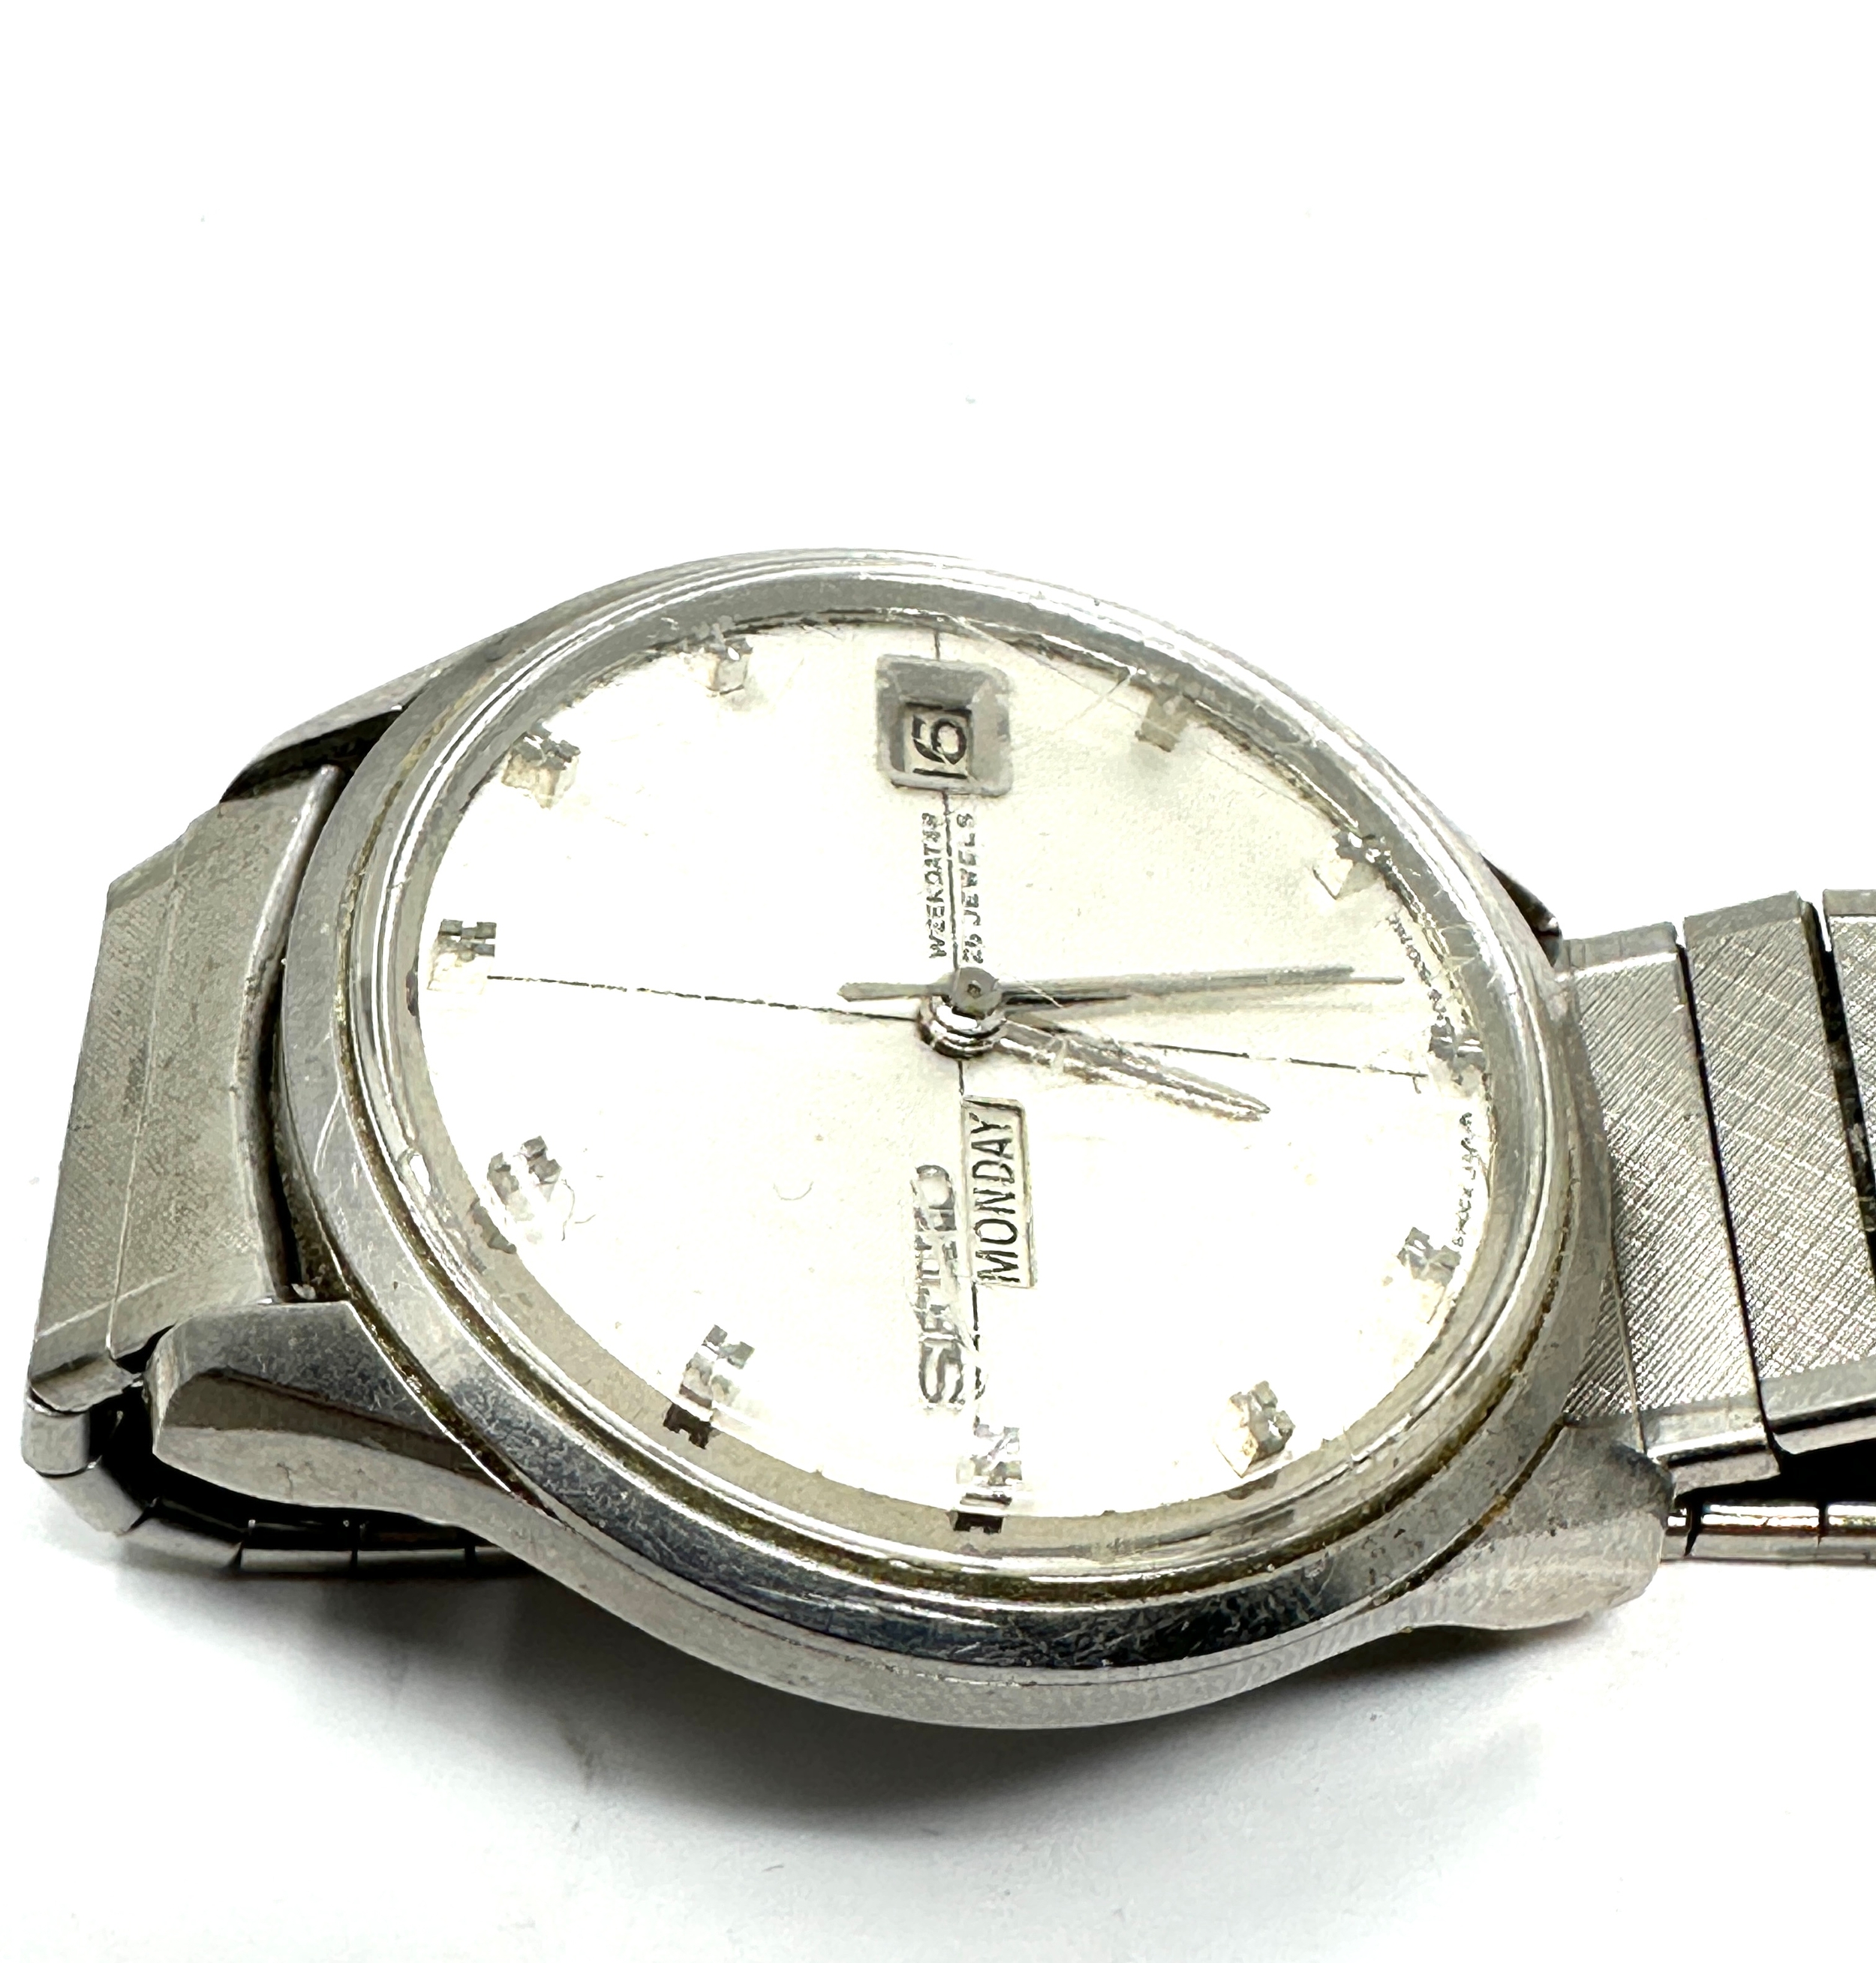 Vintage Seiko Weekdater 26 jewel gents wristwatch the watch is ticking - Image 4 of 6